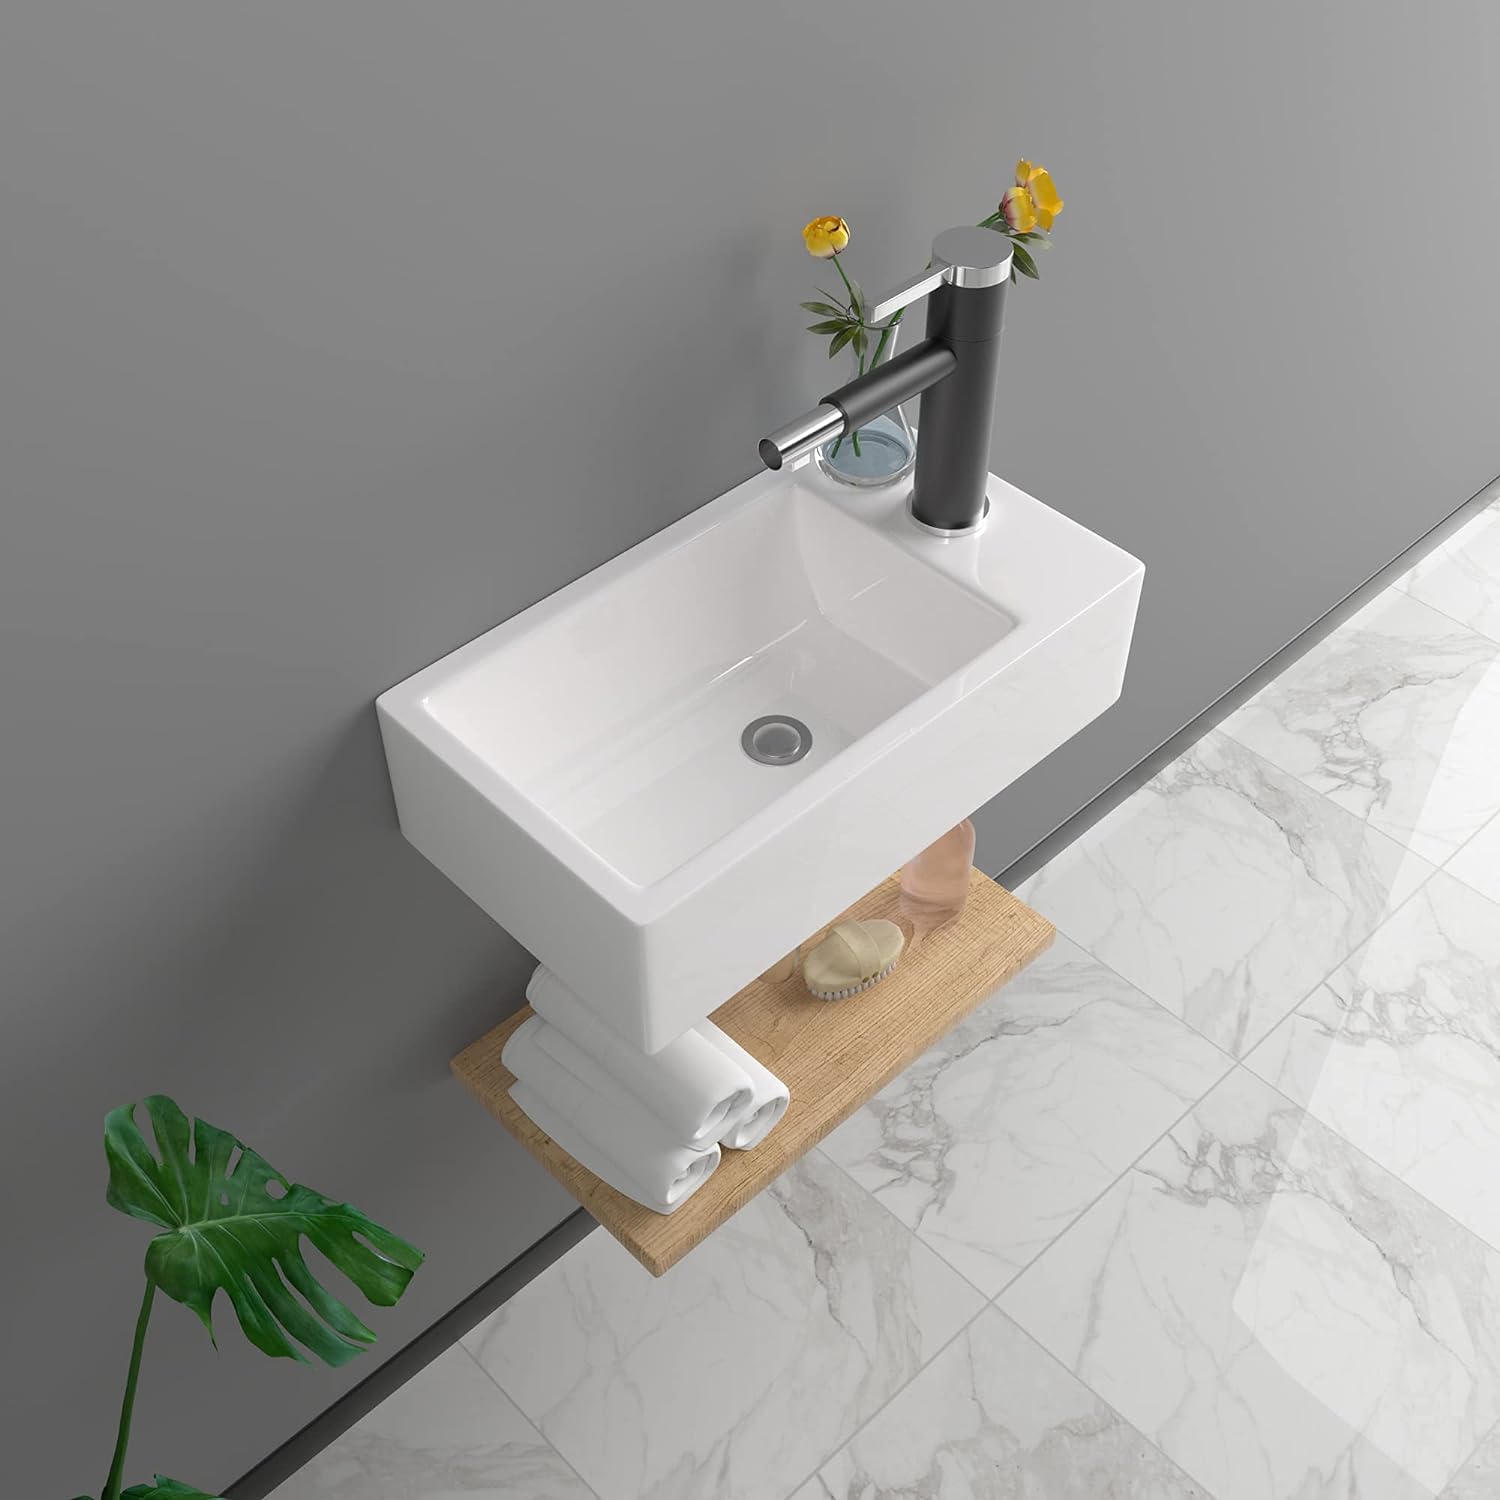 Lofeyo Floating Bathroom Sink Wall Mounted -  Modern Bathroom Vessel Sink Corner Mounted White Ceramic Porcelain Mini Small Rectangula